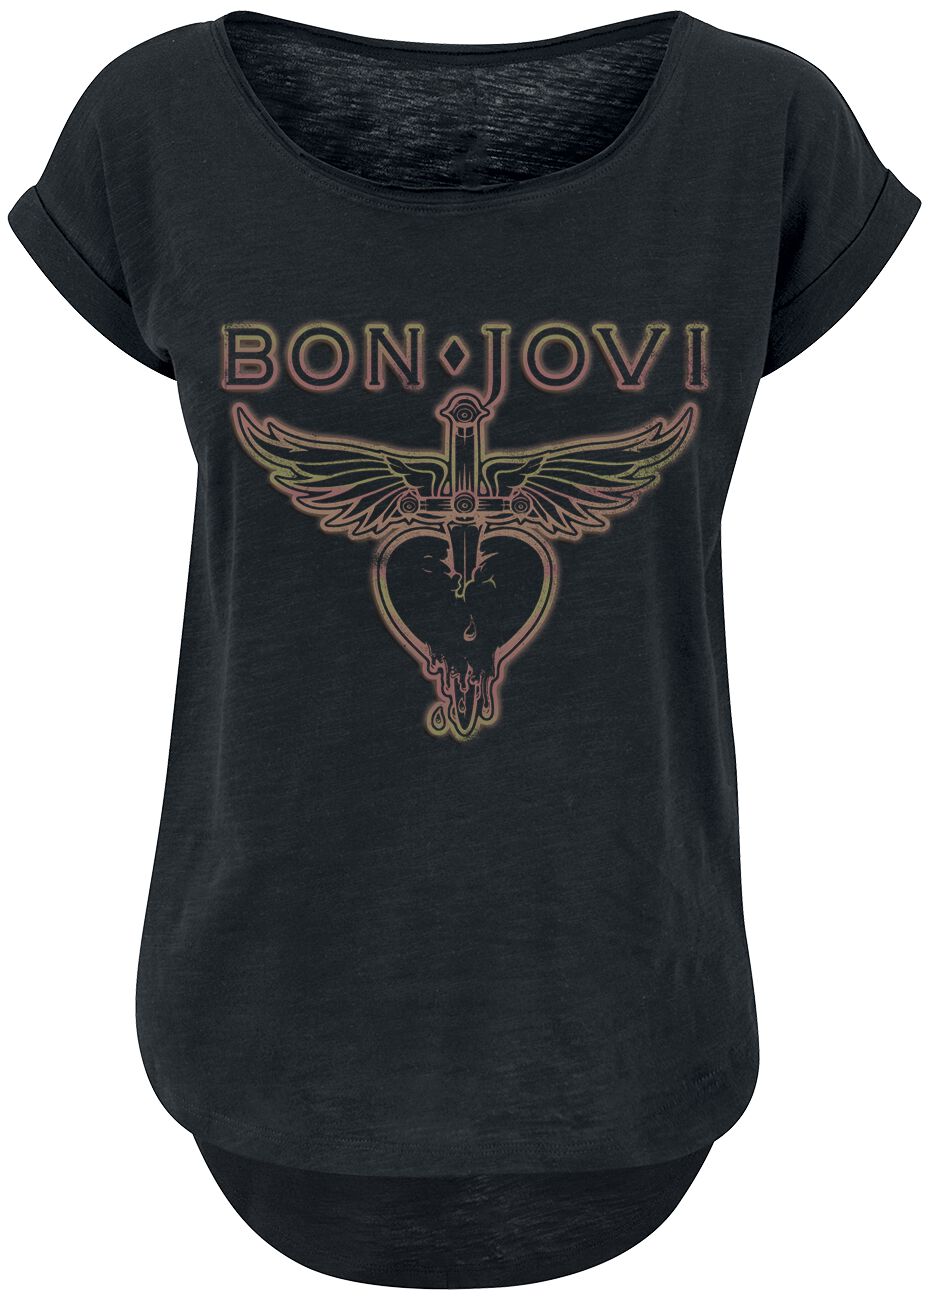 bon jovi t-shirt - heart & dagger outline - s bis 3xl - fÃ¼r damen - grÃ¶ÃŸe s - - lizenziertes merchandise! schwarz donna